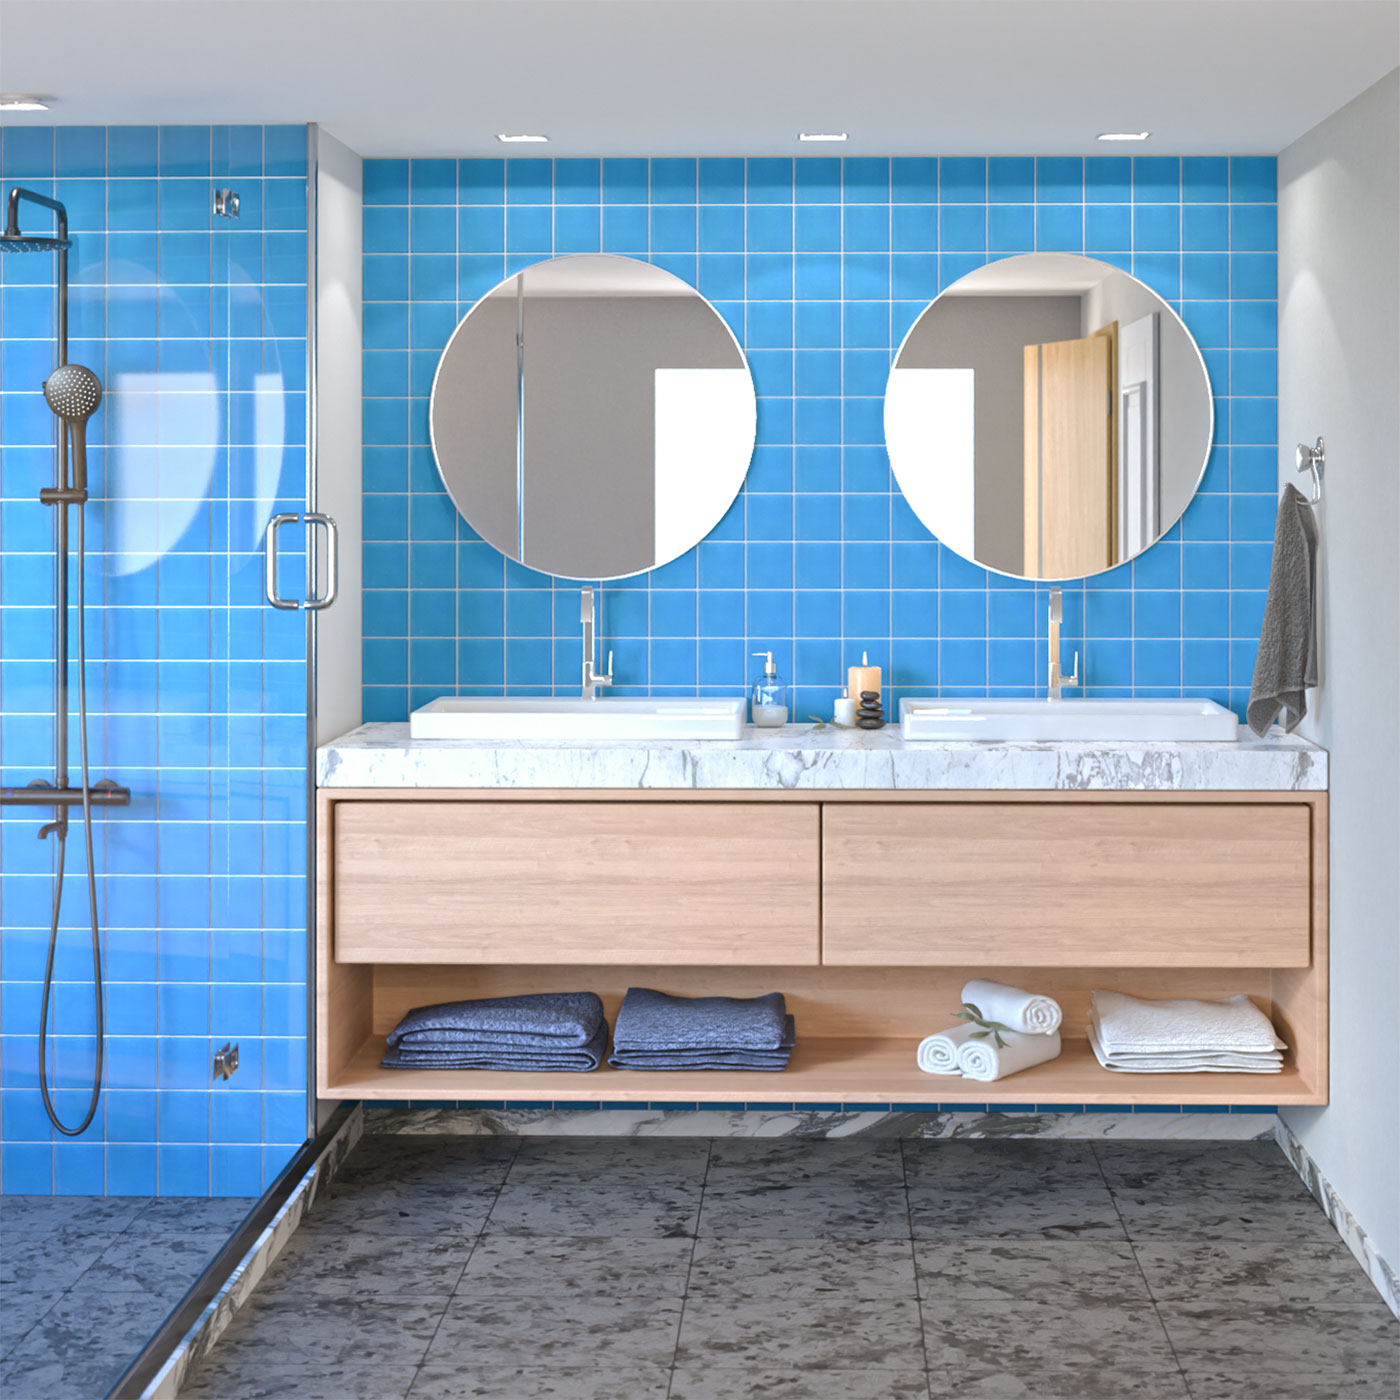 Bathroom Wall with Turquoise Talavera Tile